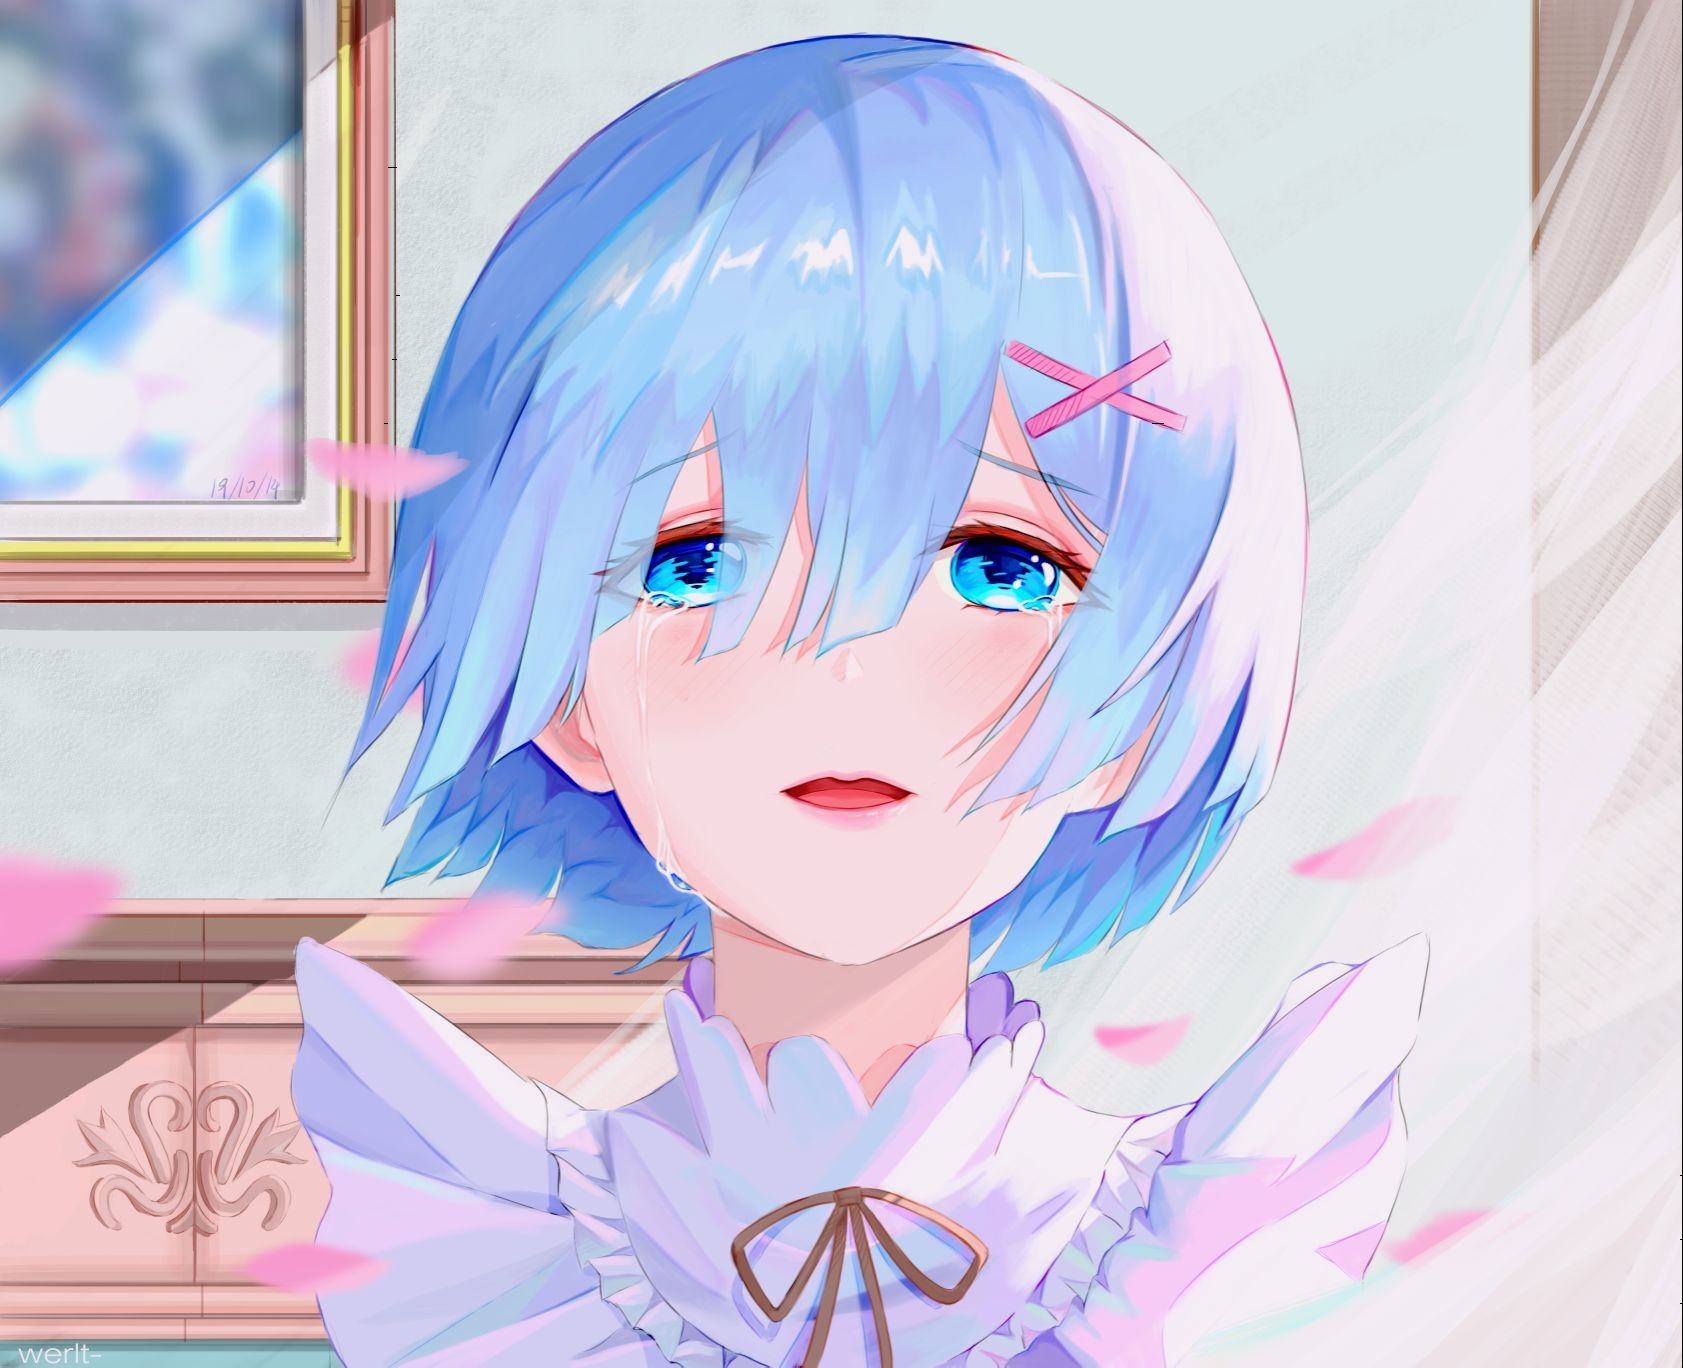 Anime 1683x1368 Re:Zero Kara Hajimeru Isekai Seikatsu anime girls 2D fan art digital art short hair blue hair maid outfit blue eyes Rem (Re:Zero) crying petals